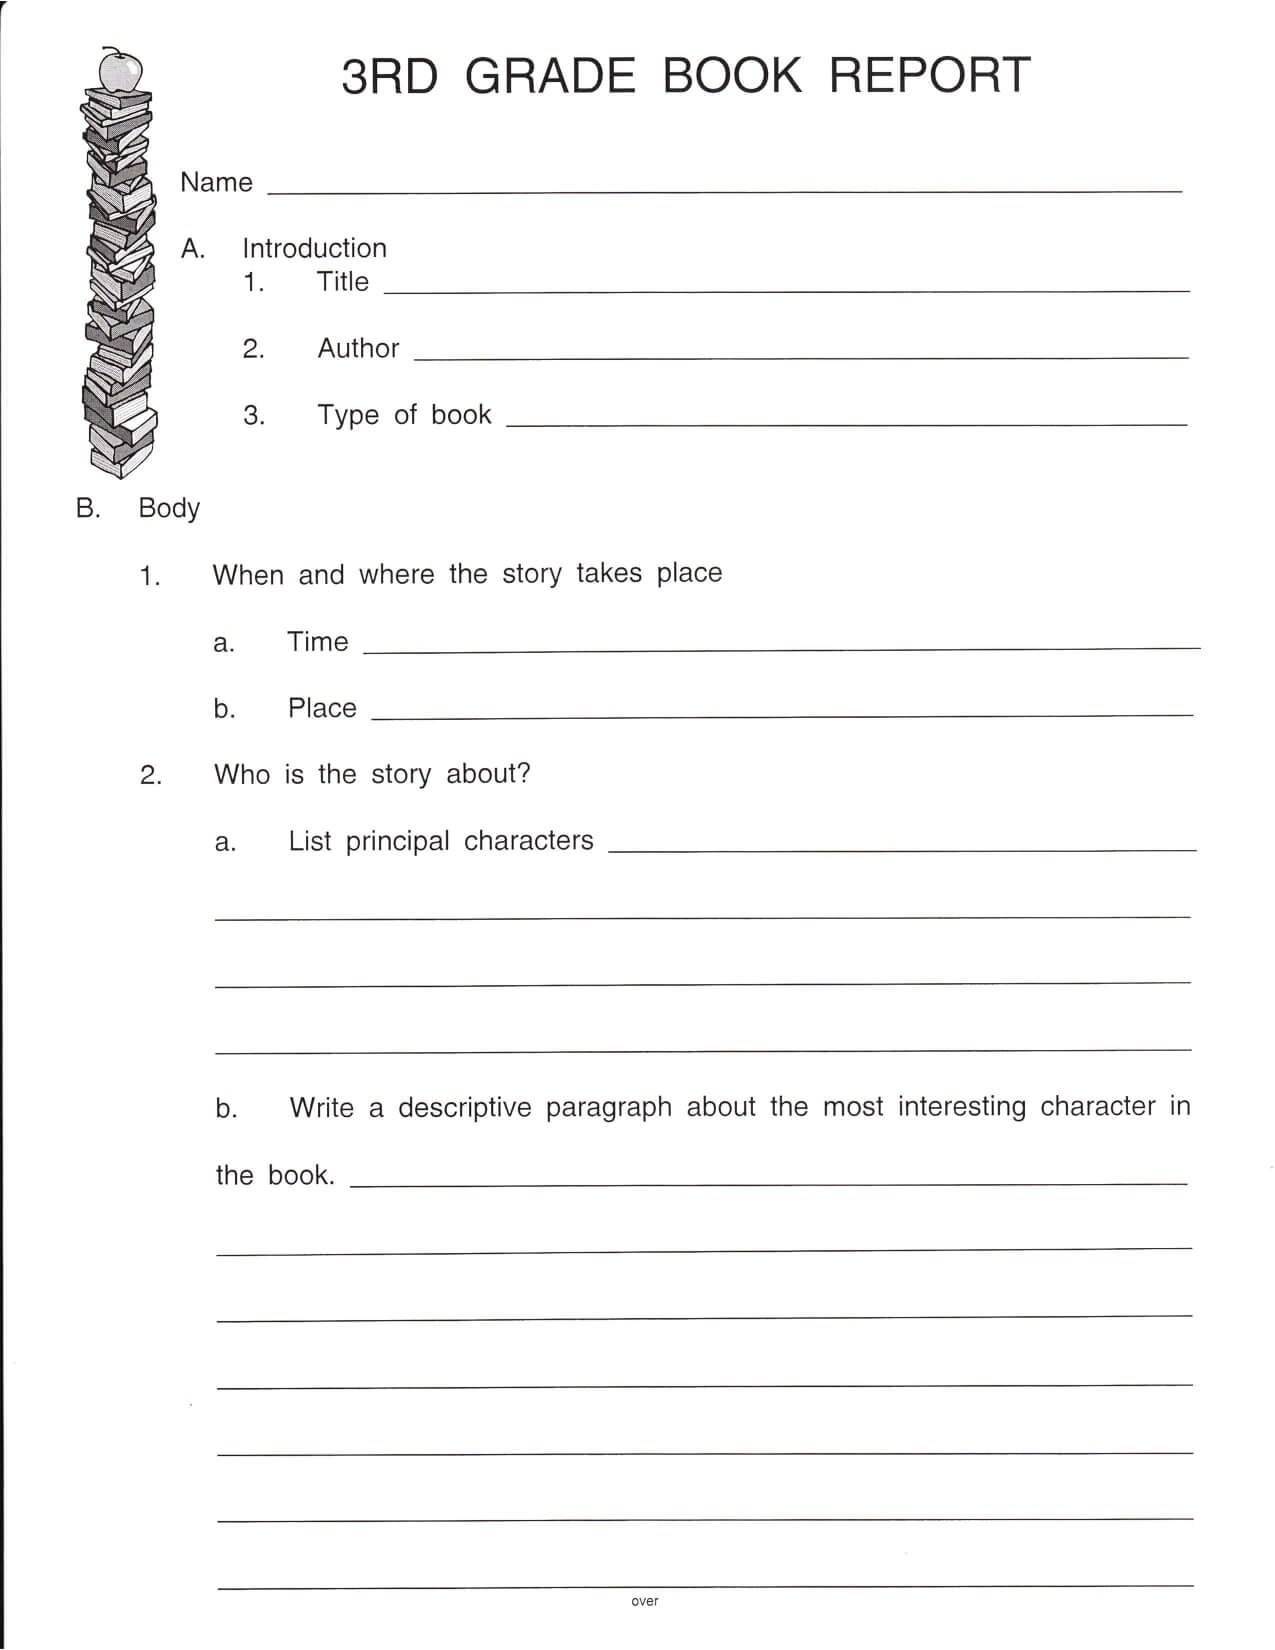 Pinshelena Schweitzer On Classroom Reading | 3Rd Grade With Book Report Template Grade 1